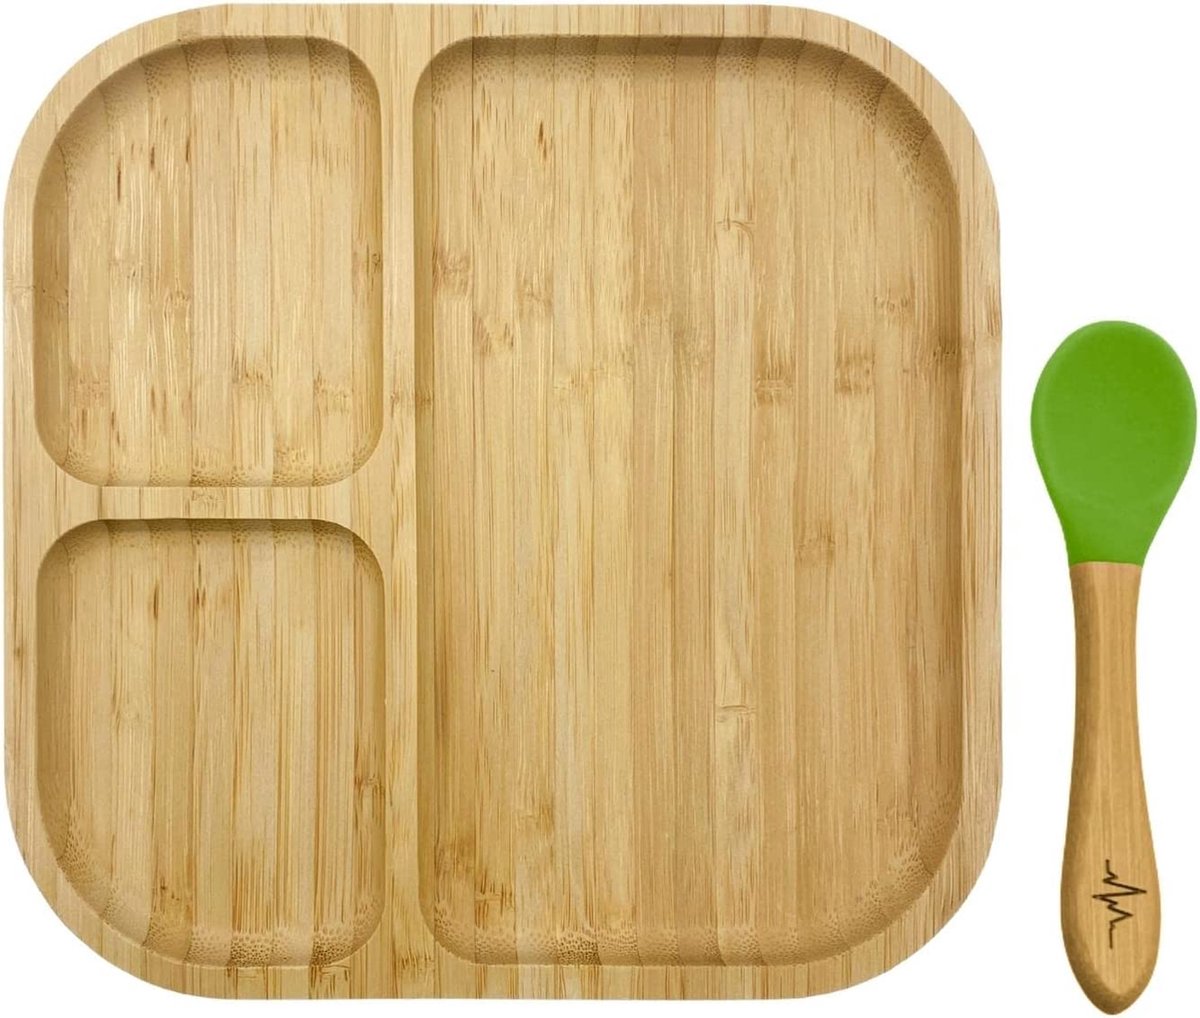 natural styles & more® Bamboe babybord, kinderbord met zuignap, 2-delig, bamboe bord, inclusief lepel voor geen kinderen, tijdloos design, bamboe serviesset, Clever Plate Basic (groen)